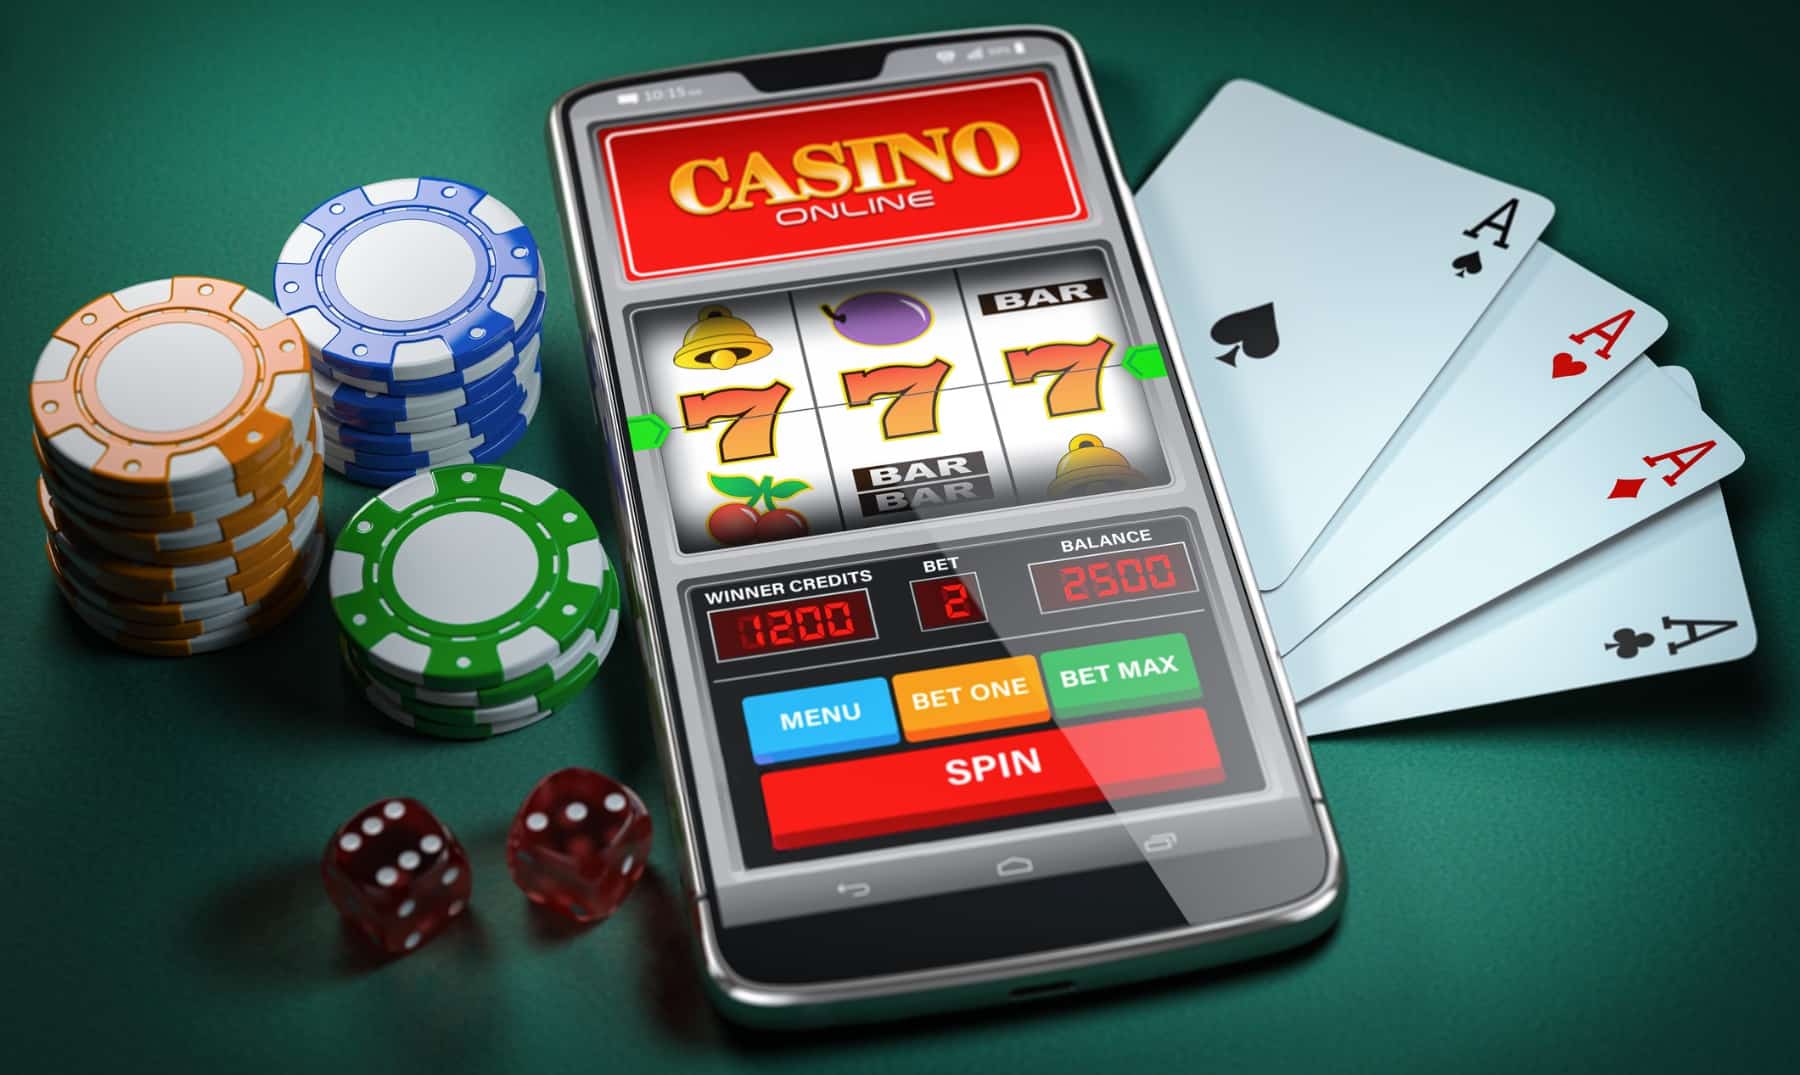 Jugadores latinos prefieren celulares para acceder a casinos online